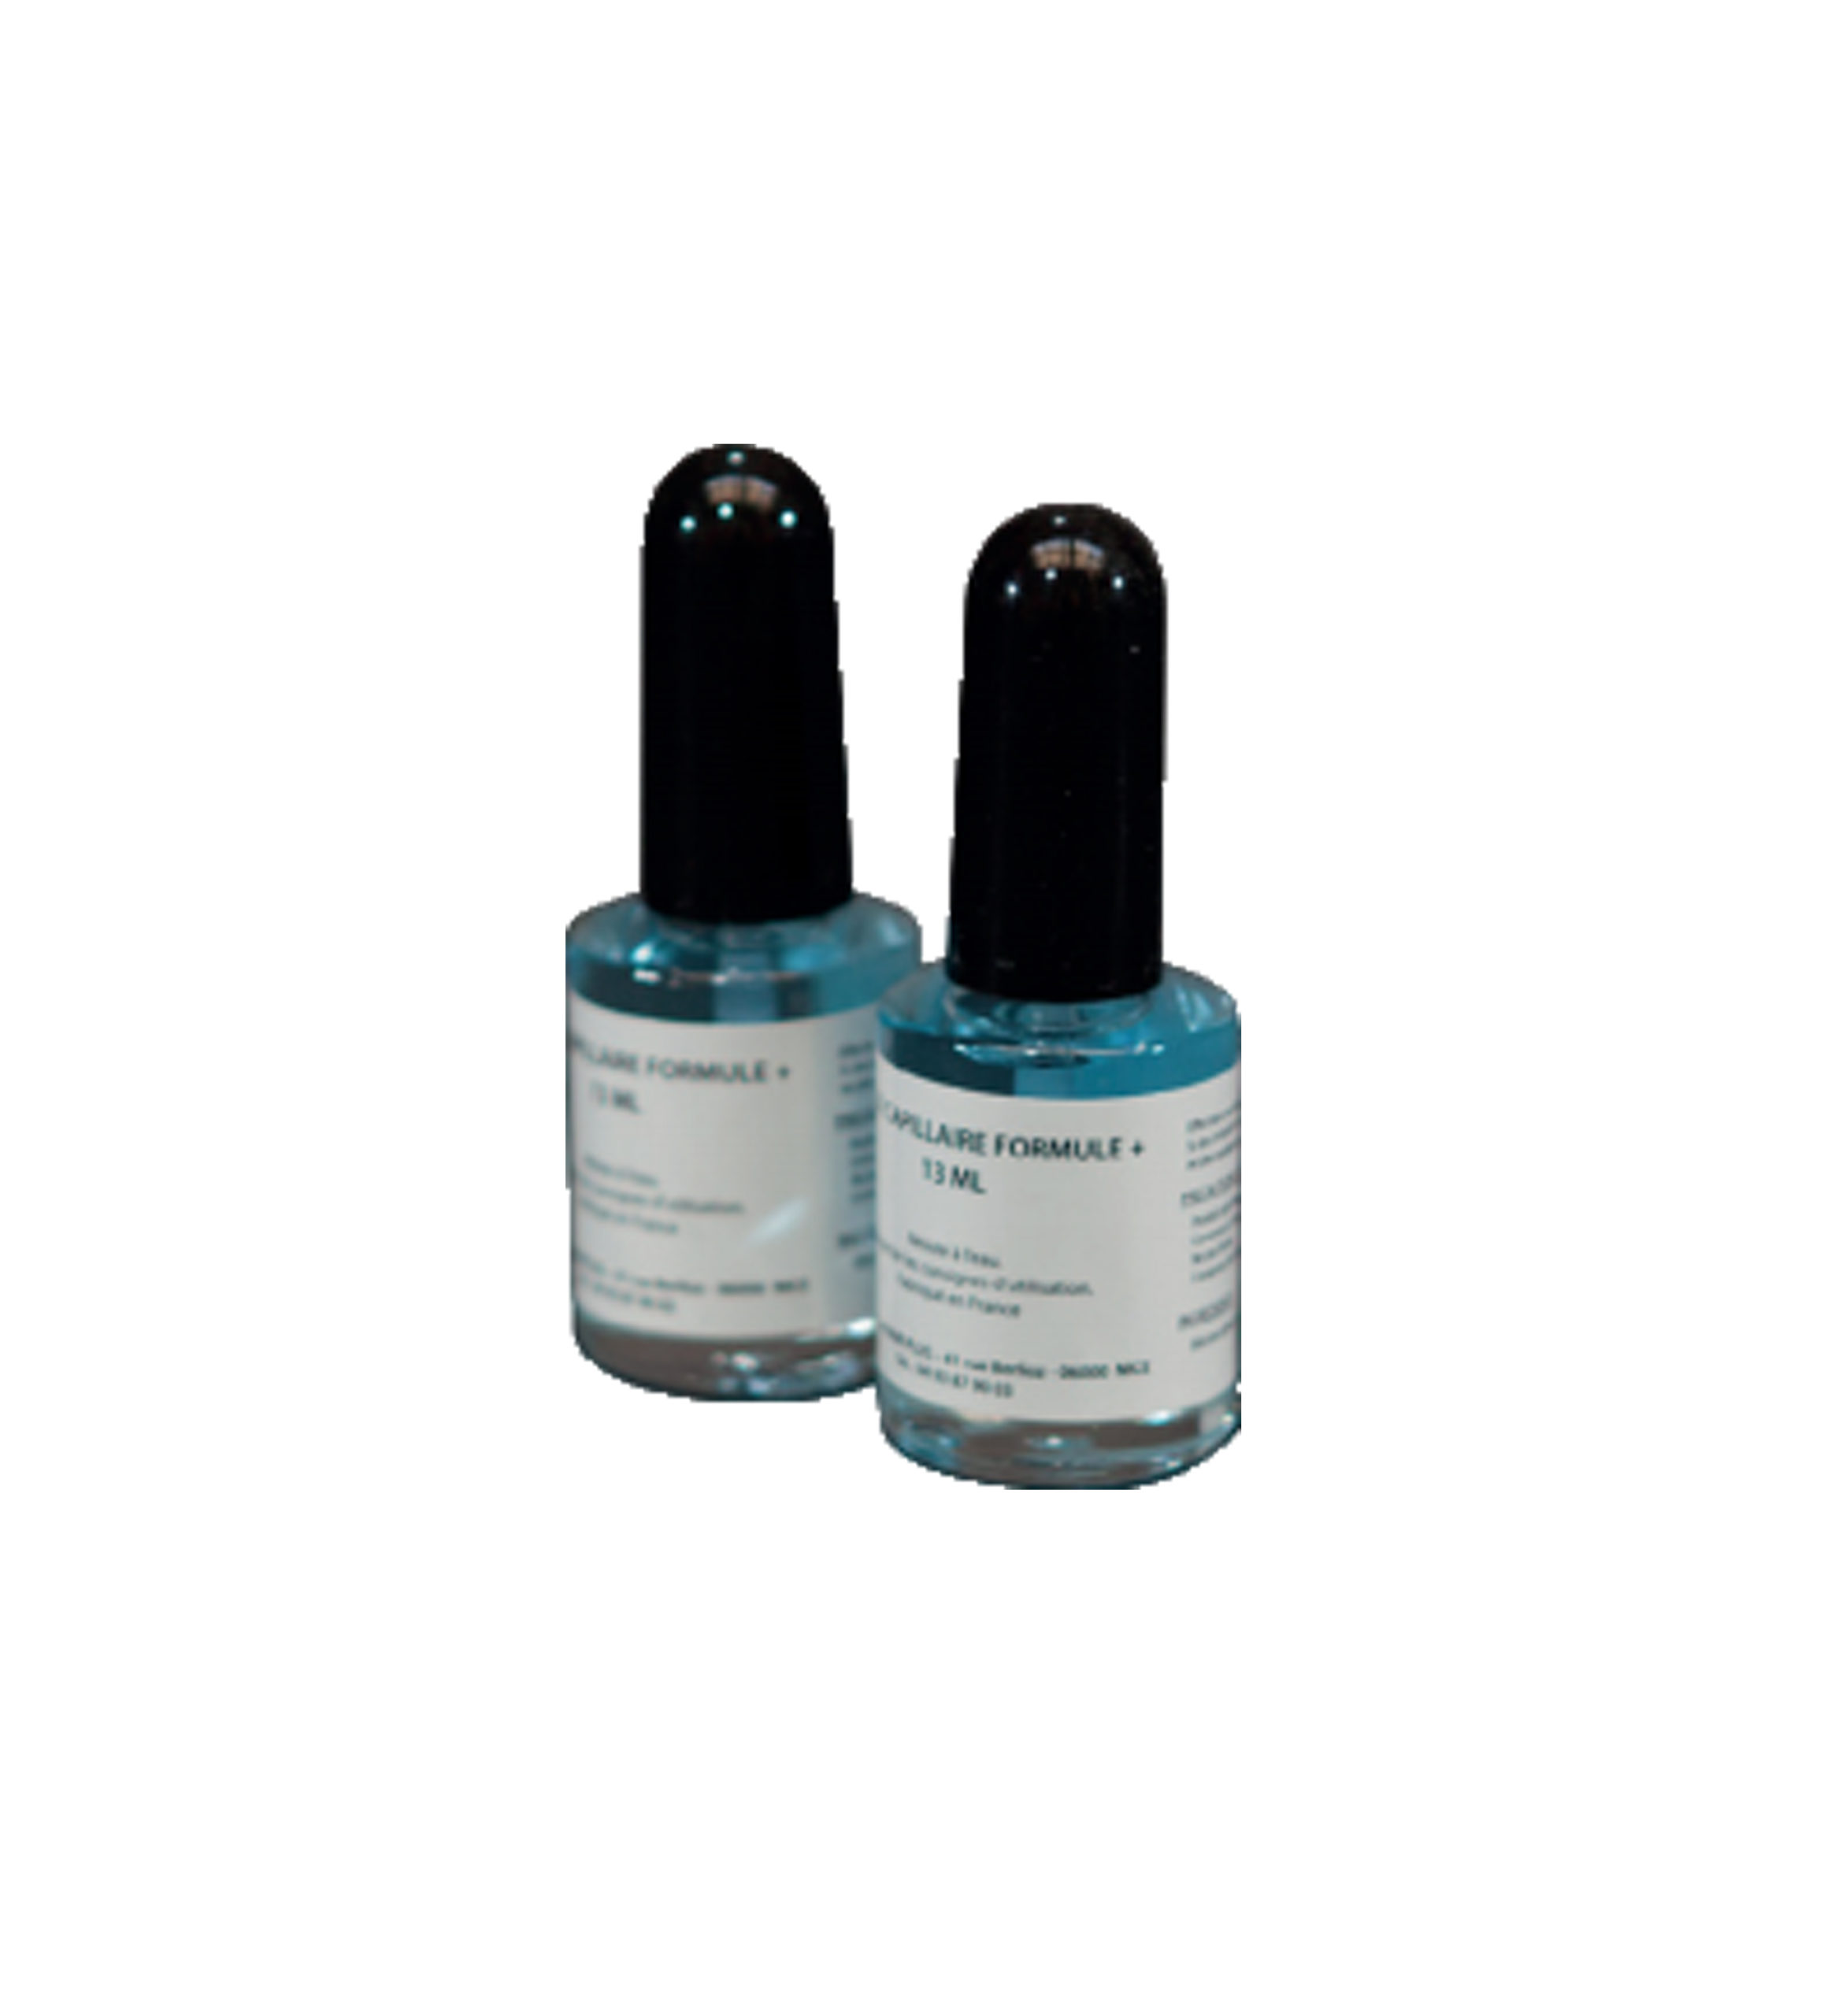 Pack 2 Colles type silicone bleue (13ml) – Flacon Retouche